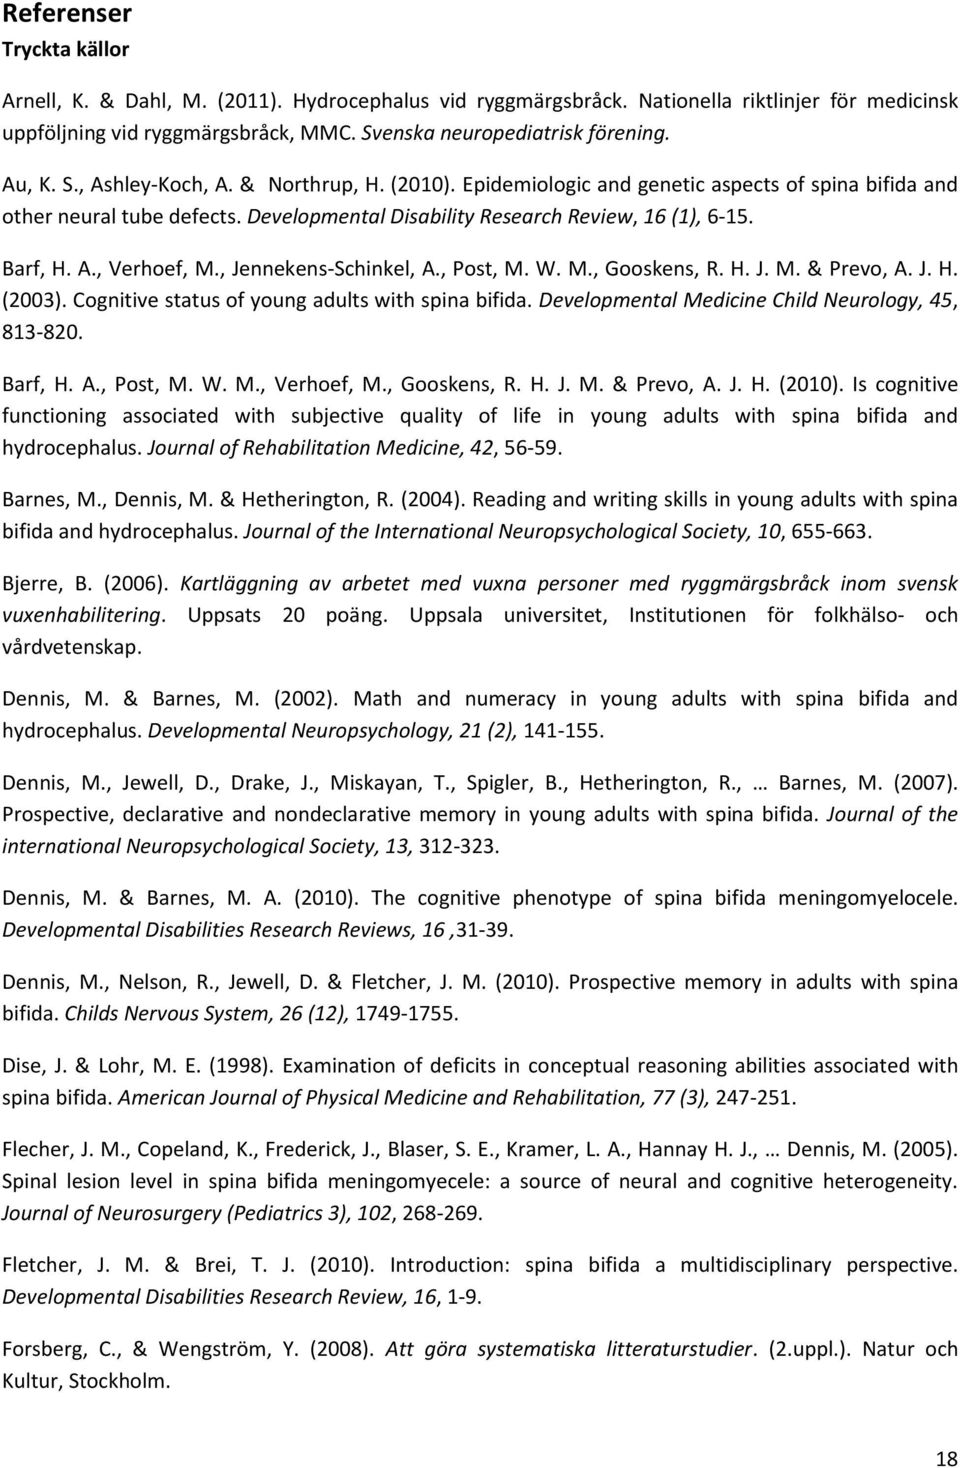 , Jennekens-Schinkel, A., Post, M. W. M., Gooskens, R. H. J. M. & Prevo, A. J. H. (2003). Cognitive status of young adults with spina bifida. Developmental Medicine Child Neurology, 45, 813-820.